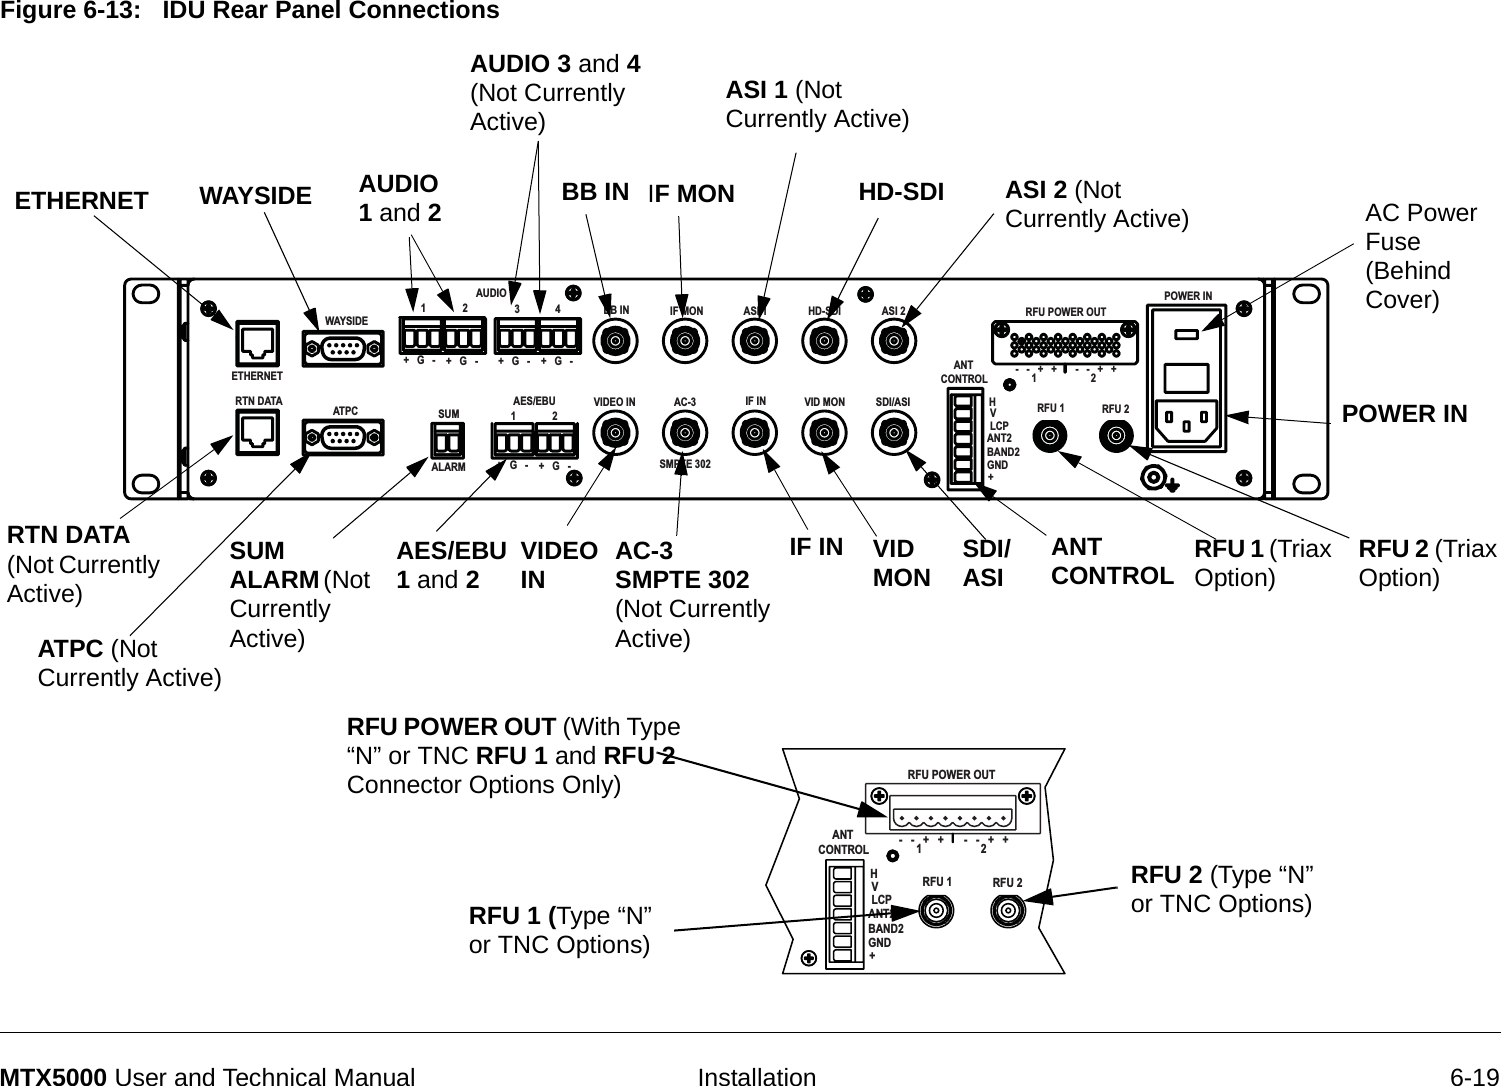   Installation 6-19MTX5000 User and Technical ManualFigure 6-13:   IDU Rear Panel Connections ETHERNETRTN DATAWAYSIDEATPCAUDIO1234+   G   - +   G   - +   G   - +   G   -SUMALARMAES/EBU VIDEO INBB IN IF MONAC-3SMPTE 302ASI 1 HD-SDI ASI 2IF IN VID MON SDI/ASI        ANT   CONTROLRFU POWER OUTRFU 1 RFU 2HVLCPANT2BAND2GND+-   -   +   +-   -   +   +12POWER IN+   G   - +   G   -12ETHERNET WAYSIDE AUDIO 1 and 2RTN DATA (Not Currently Active)BB IN IF MONASI 1 (Not Currently Active)HD-SDI ASI 2 (Not Currently Active)RFU POWER OUT (With Type “N” or TNC RFU 1 and RFU 2 Connector Options Only)POWER INATPC (Not Currently Active)SUM ALARM (Not Currently Active)AES/EBU 1 and 2  VIDEO IN RFU 2 (TriaxOption)RFU 1 (Triax Option)ANT CONTROLAC-3 SMPTE 302 (Not Currently Active)IF IN VID MON SDI/ASI        ANT   CONTROLRFU POWER OUTRFU 1 RFU 2HVLCPANT2BAND2GND+-   -   +   +-   -   +   +12RFU 1 (Type “N” or TNC Options)RFU 2 (Type “N” or TNC Options)AC Power Fuse (Behind Cover)AUDIO 3 and 4 (Not Currently Active)